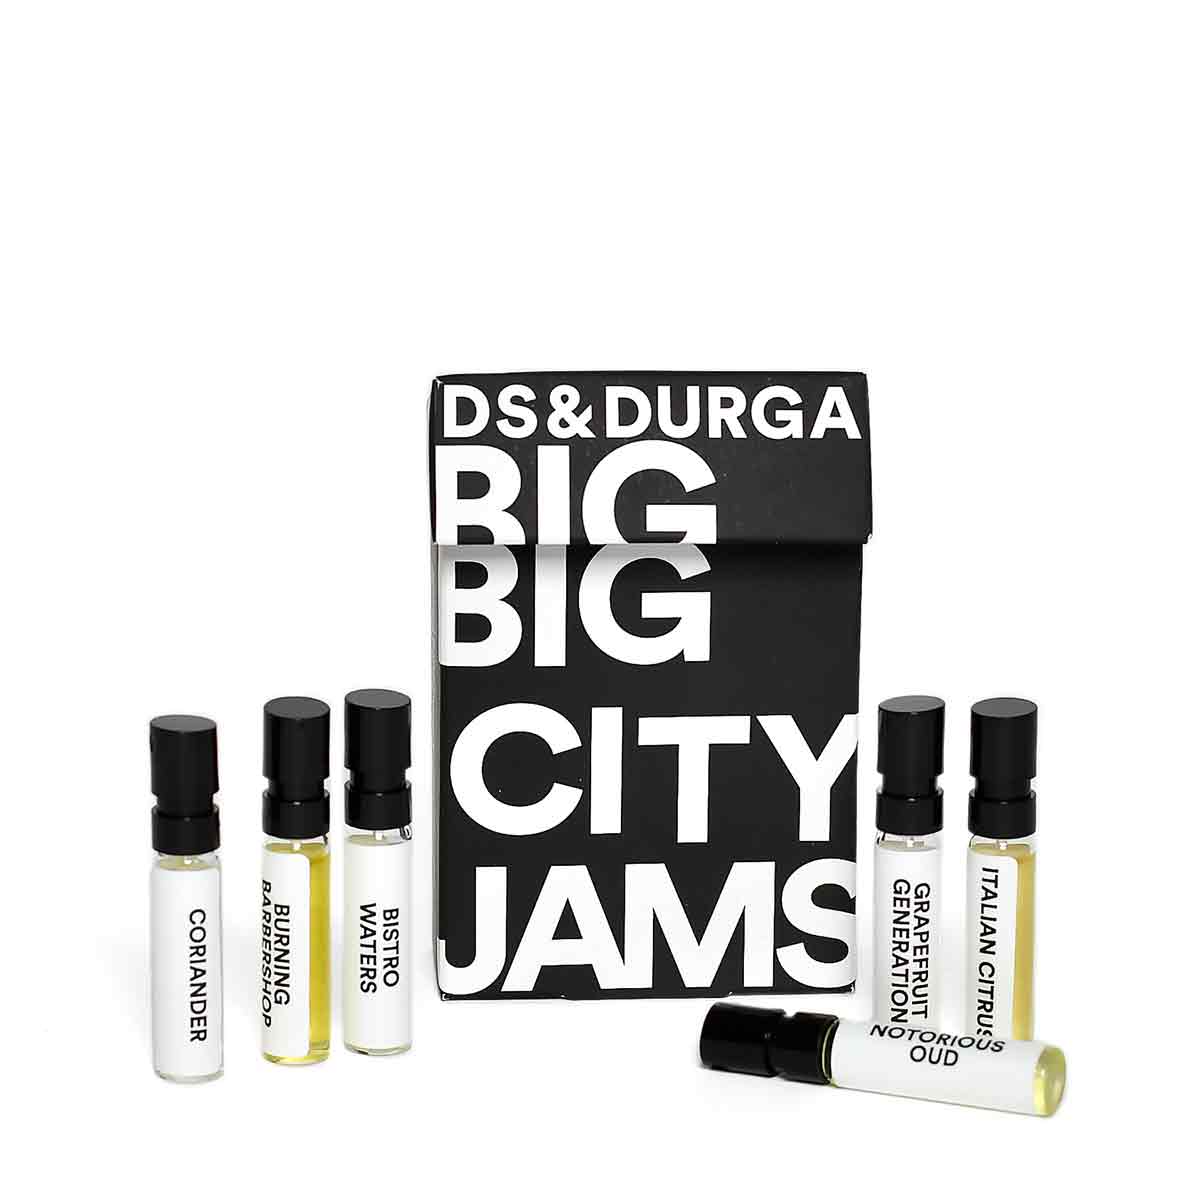 D.S. &amp; DURGA - FRAGRANCE PACK - BIG CITY JAMS